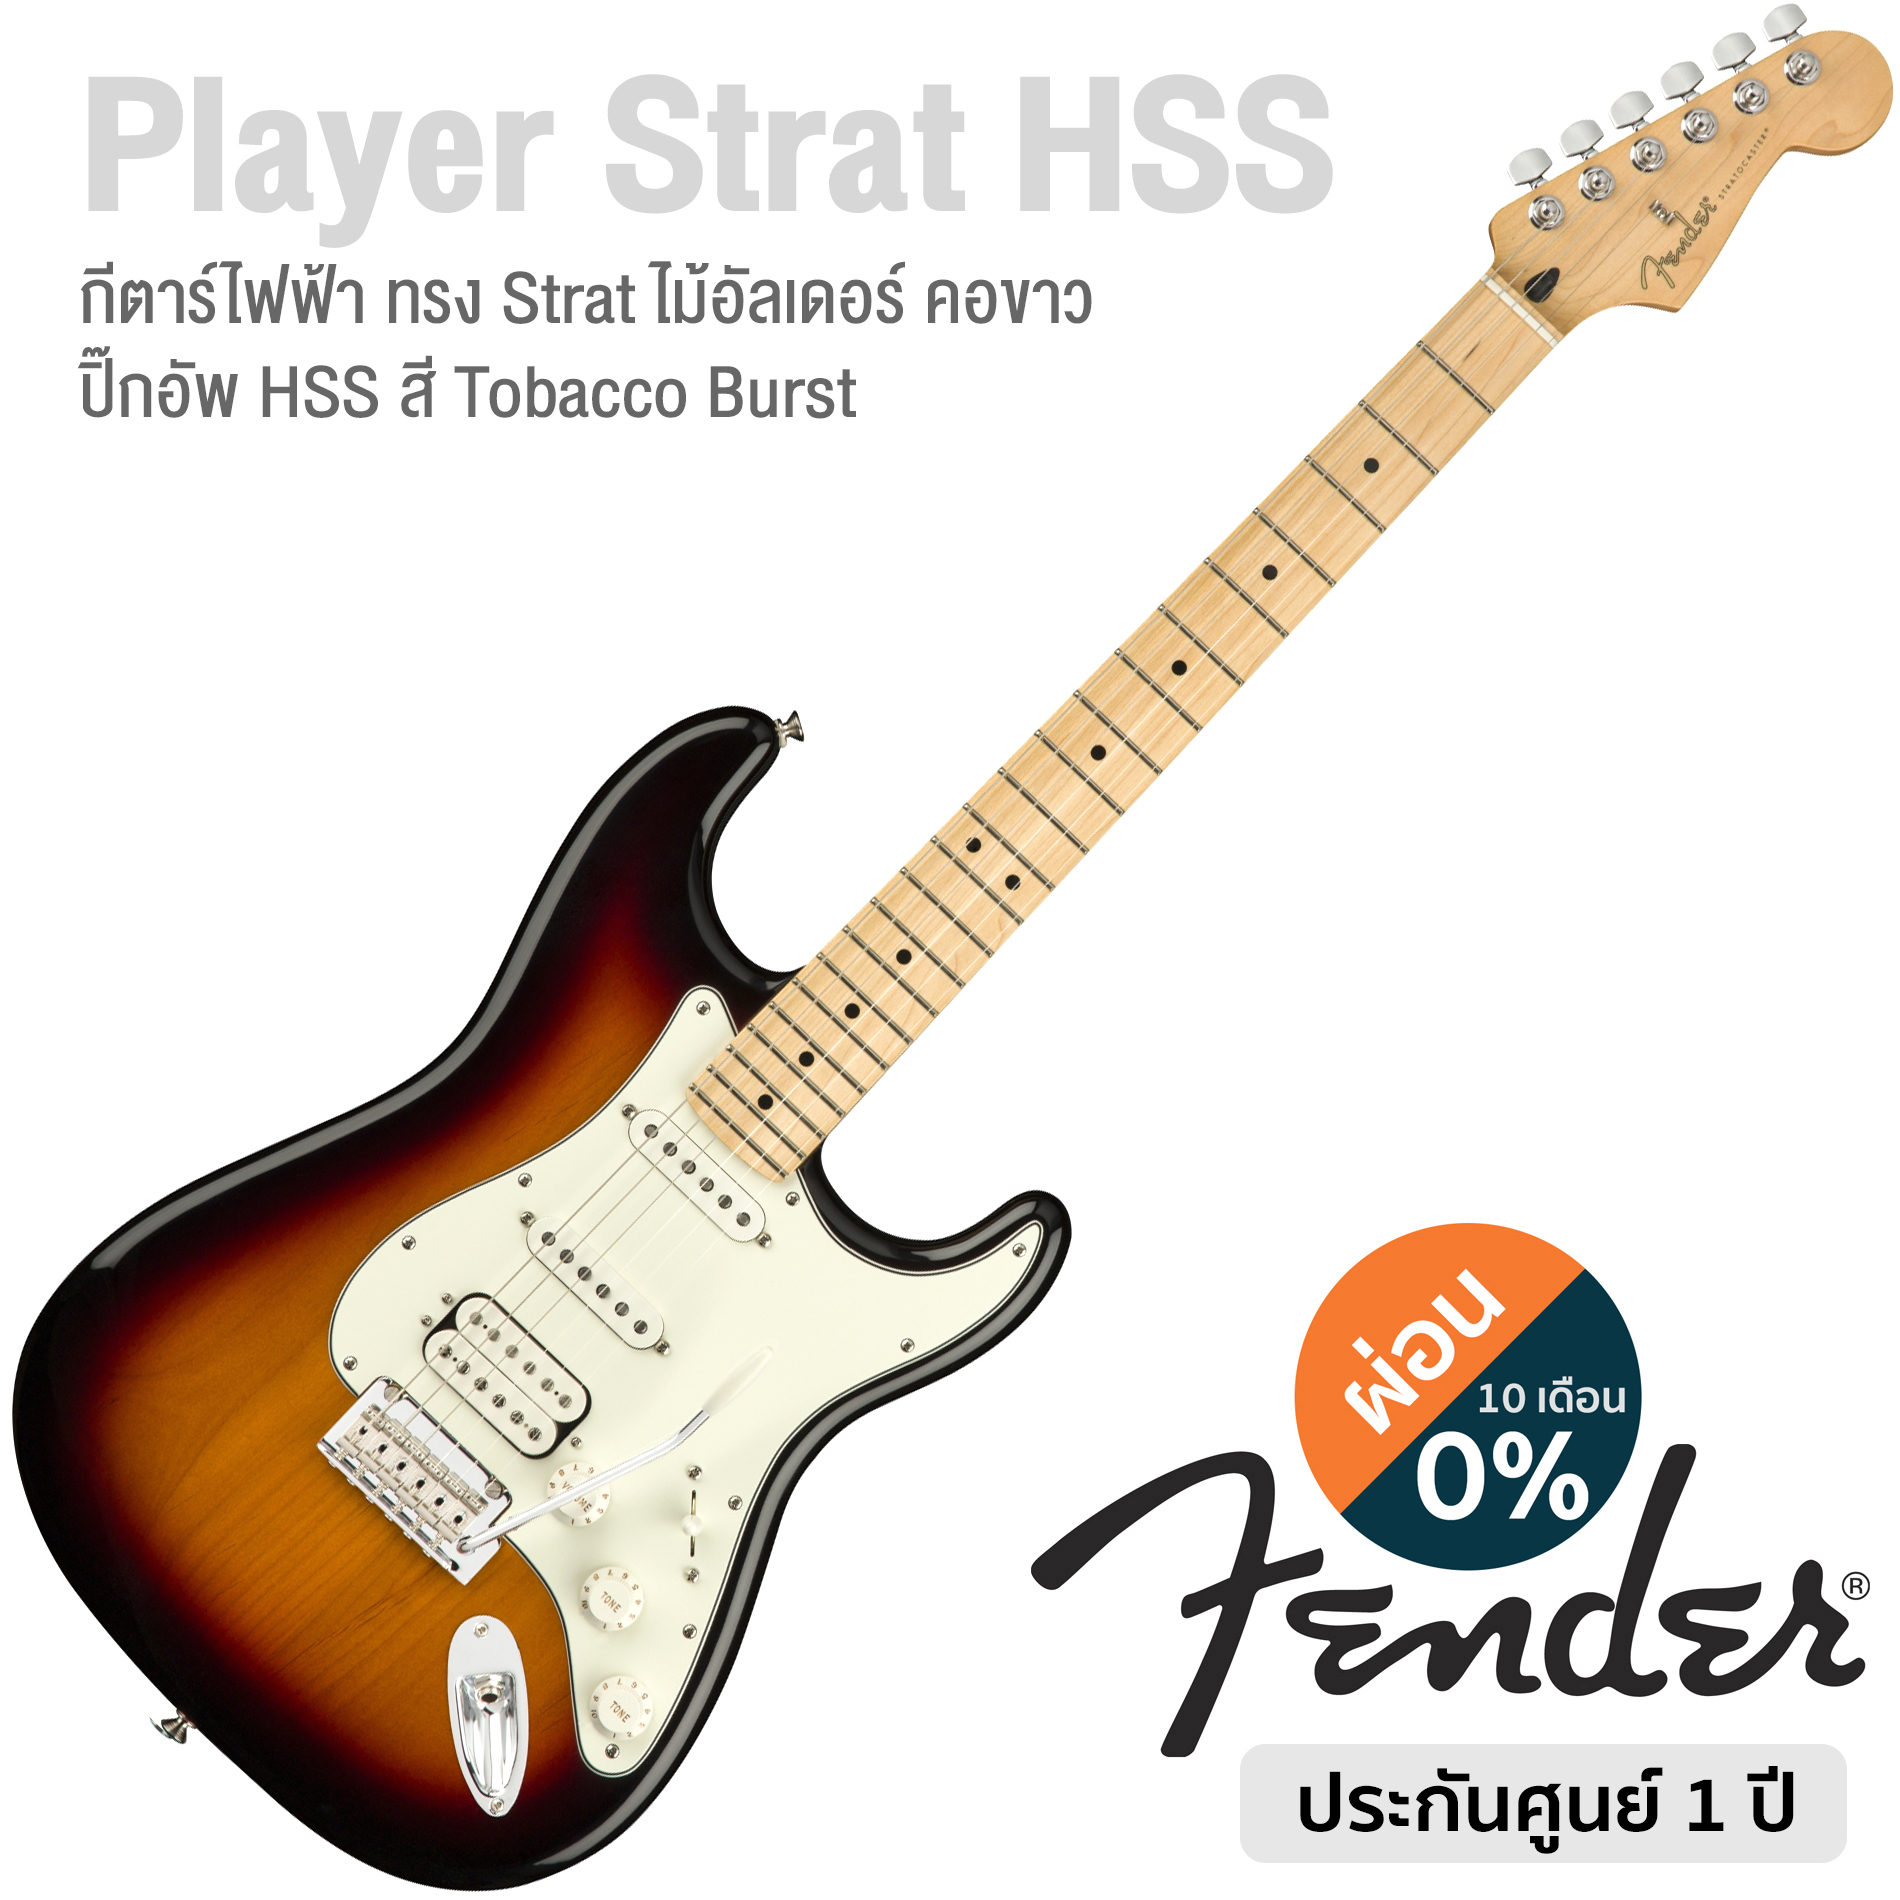 Fender® Player Strat HSS MN กีตาร์ไฟฟ้า 22 เฟร็ต บอดี้ไม้อัลเดอร์ คอไม้เมเปิ้ล ฟิงเกอร์บอร์ดไม้เมเปิ้ล ** Made in Mexico / ประกันศูนย์ 1 ปี **